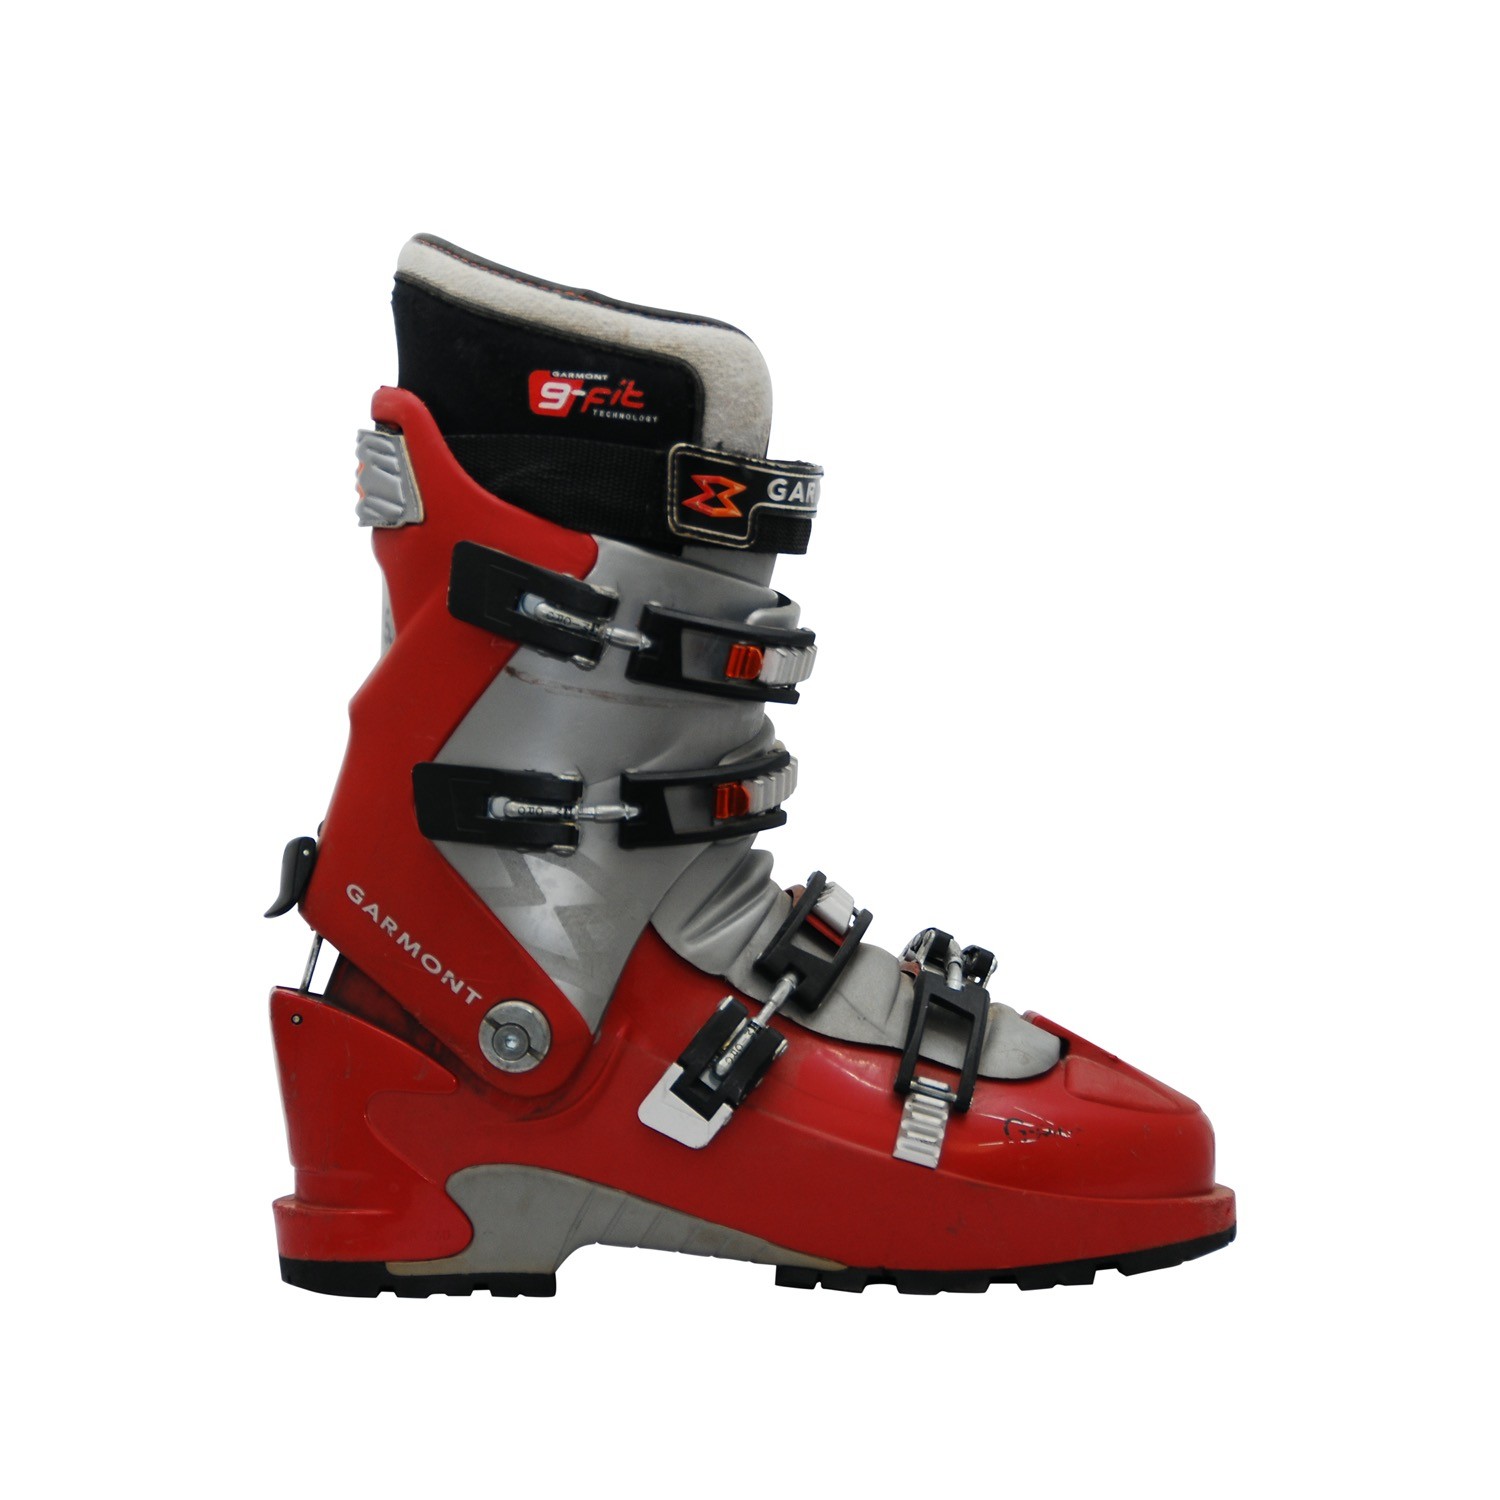 Chaussure de ski rando occasion Garmont G ride - Qualité A - 43/27.5MP